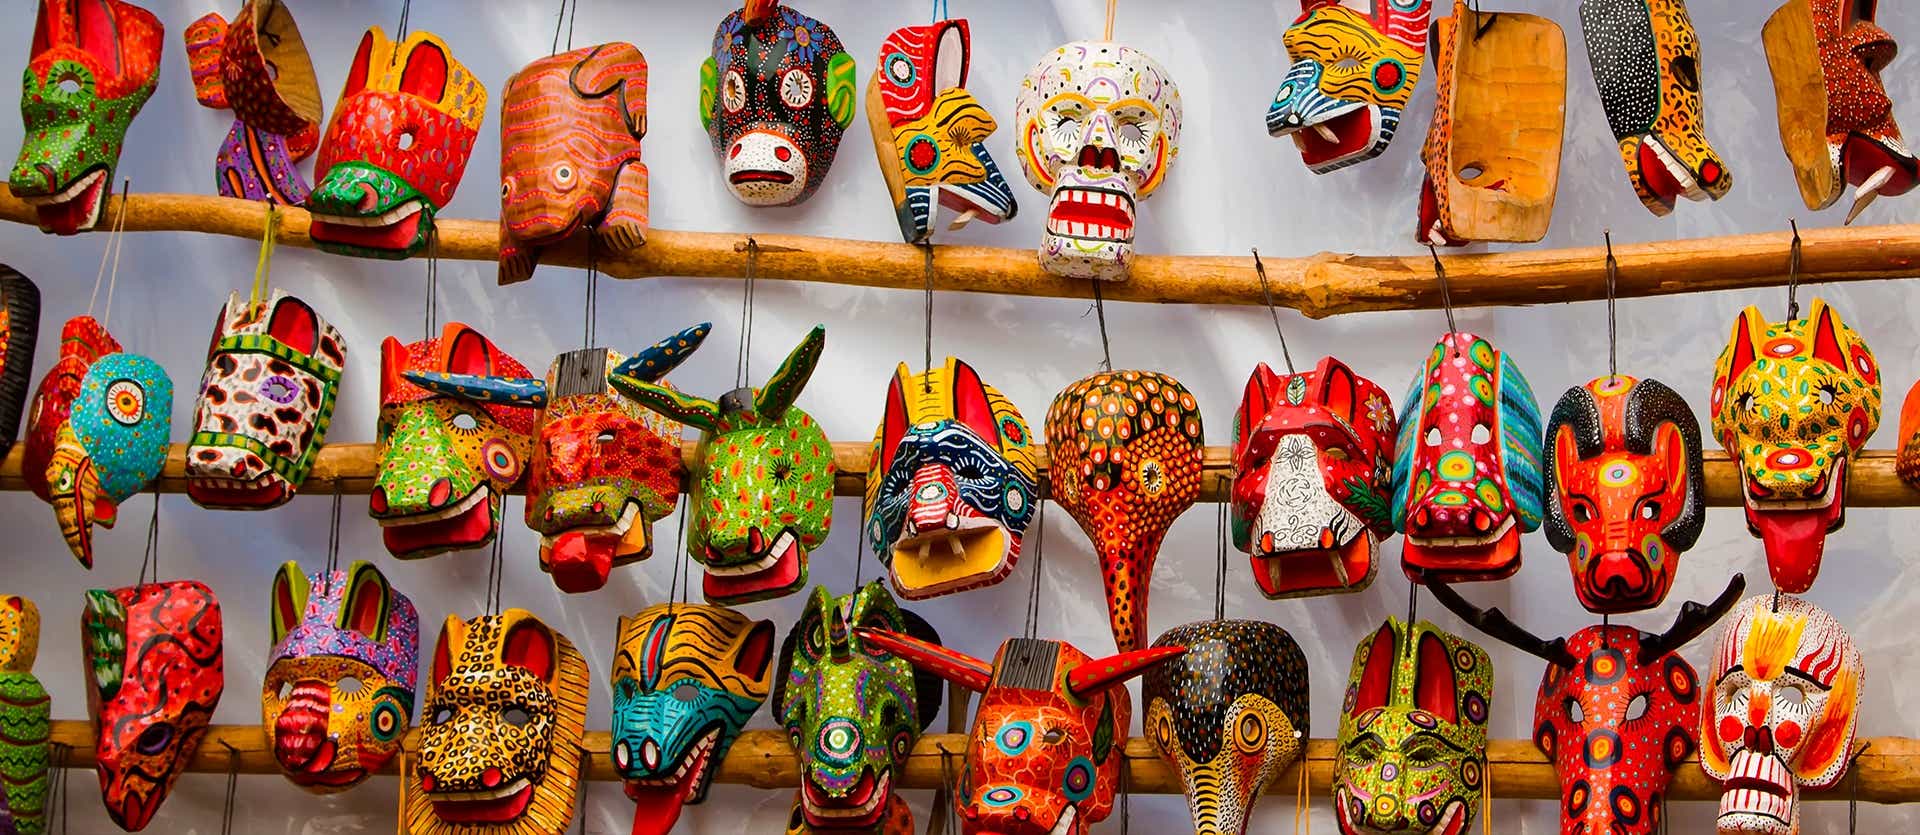 Traditional Masks <span class="iconos separador"></span> Chichicastenango <span class="iconos separador"></span> Guatemala